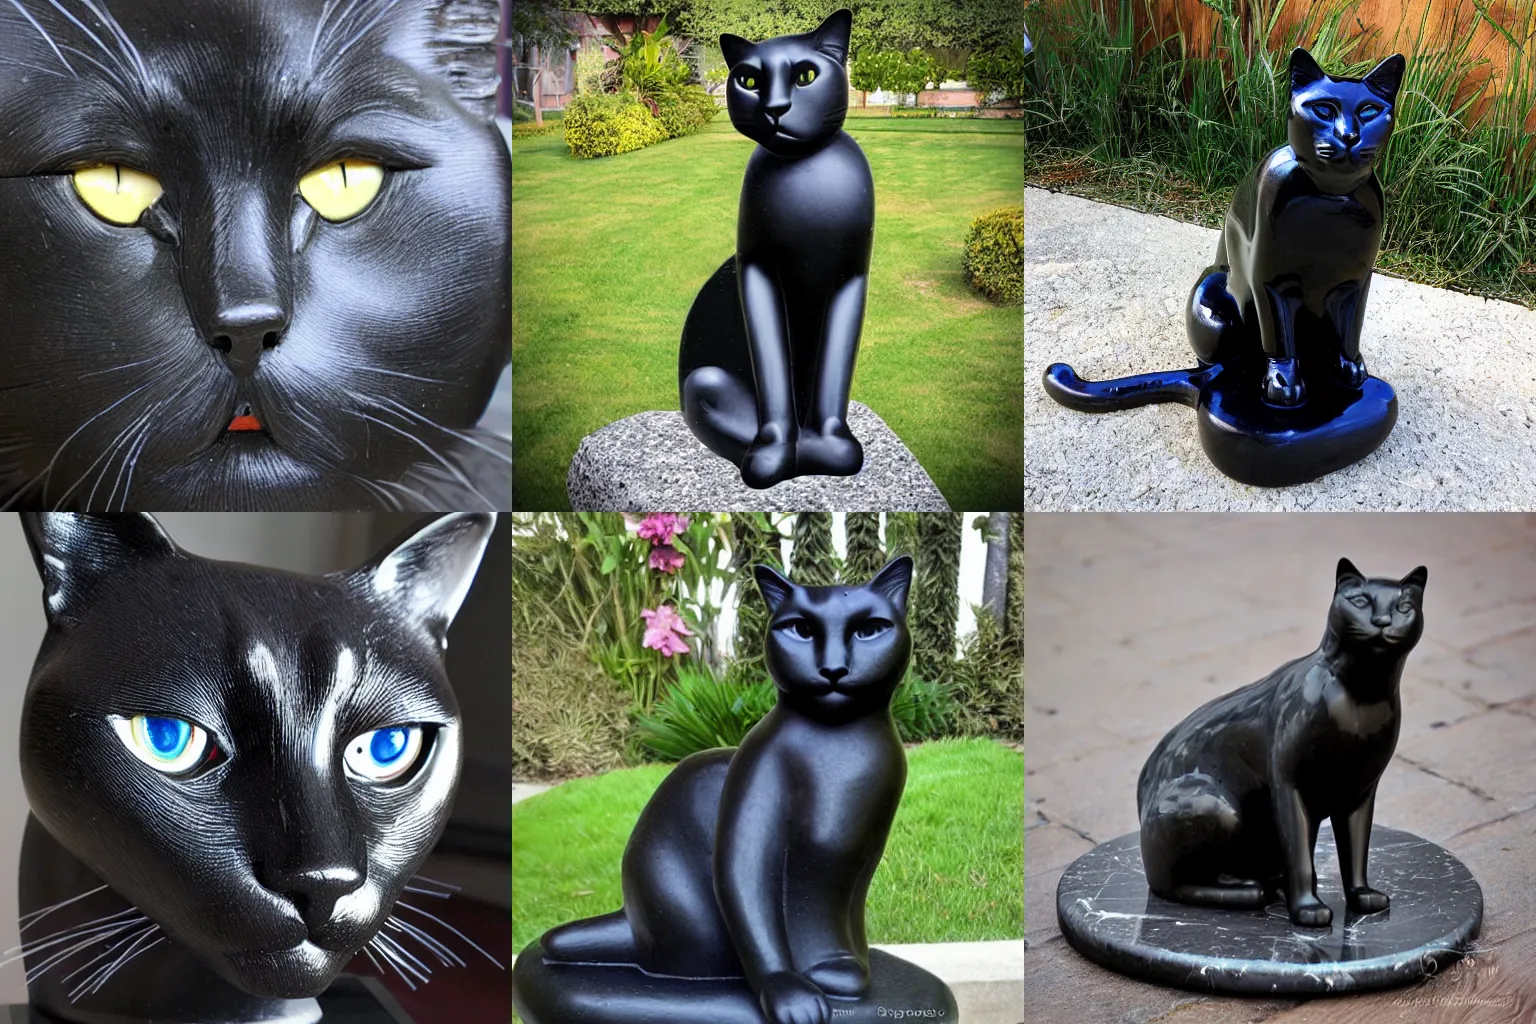 Prompt: Black marble cat sculpture, realistic photo